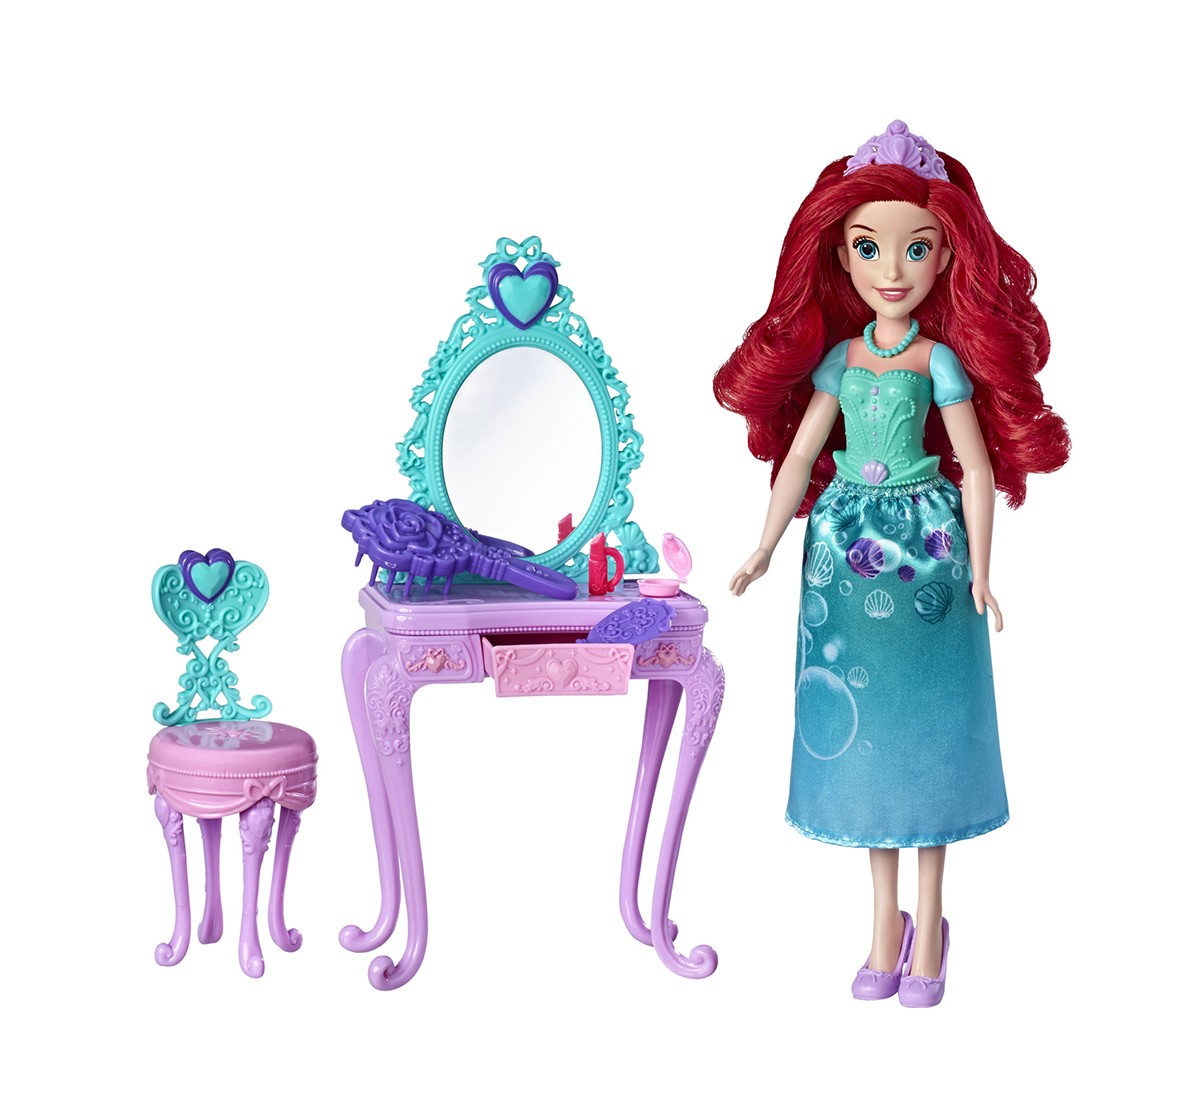 Disney Princess Ariel's Royal Vanity Dolls & Accessories for age 3Y+ 